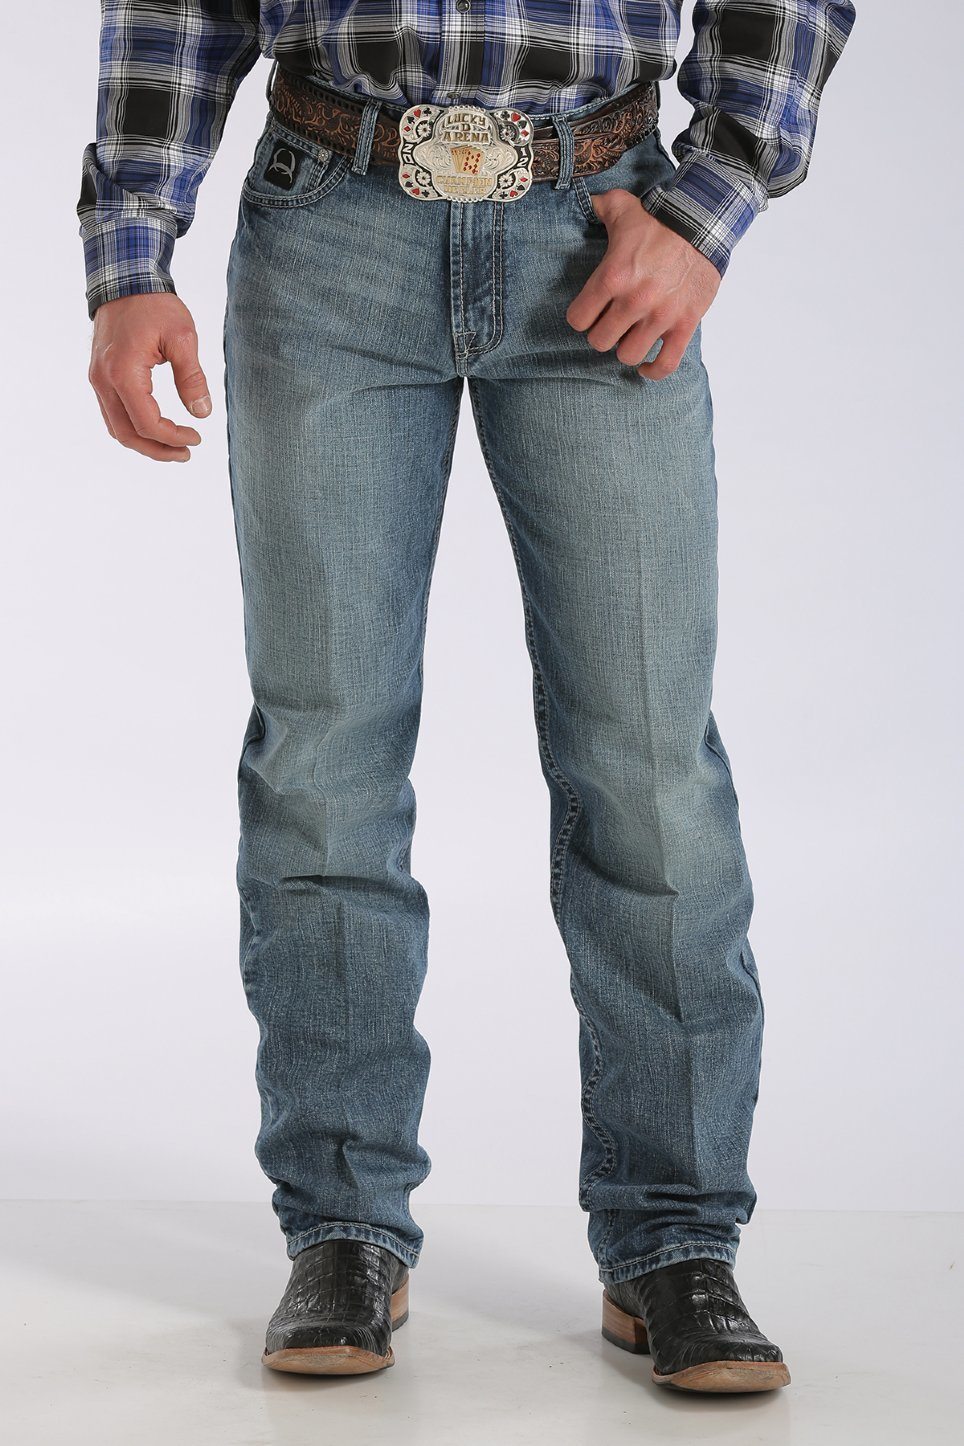 Calça Jeans Cinch Black Label 2.0 Importada Masculina